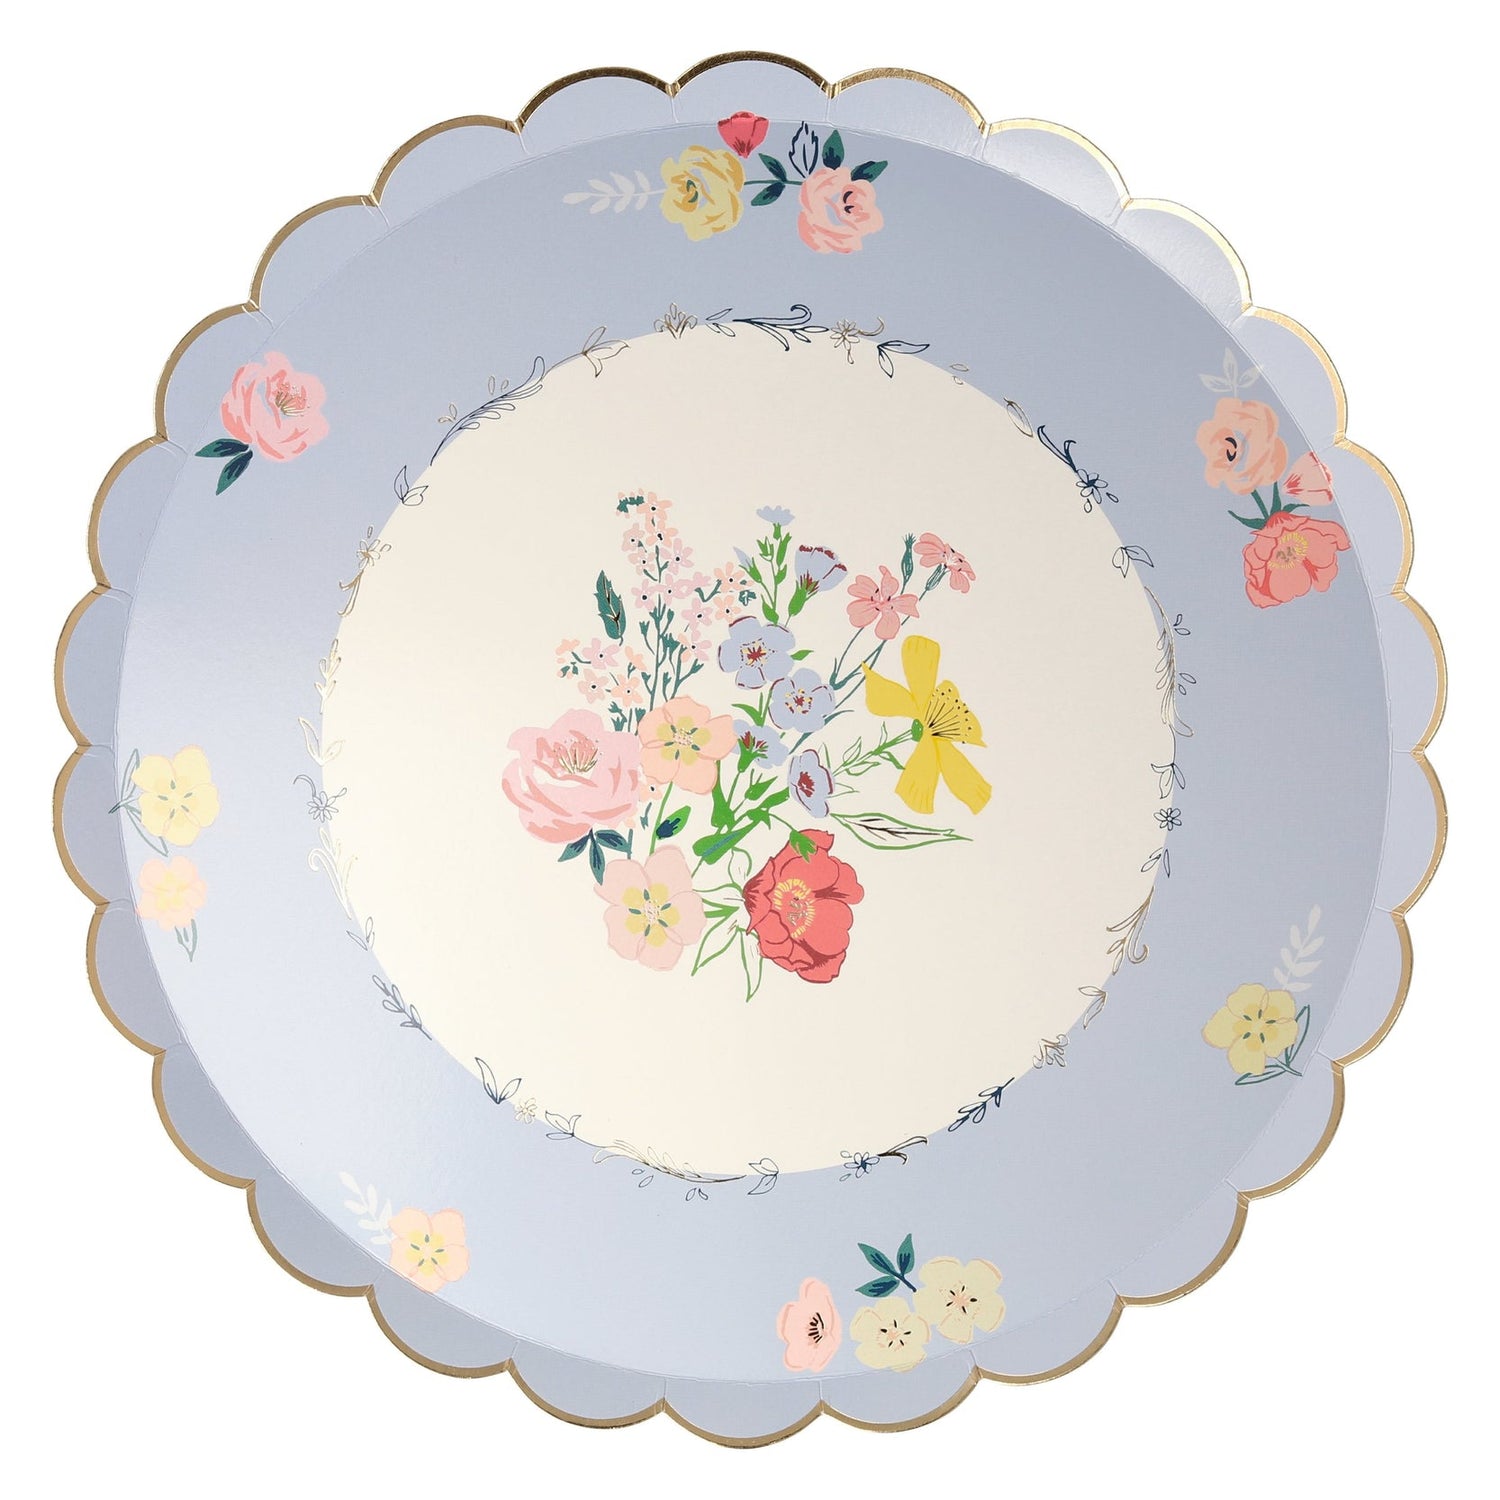 Four Meri Meri English Garden plates with floral designs on them.